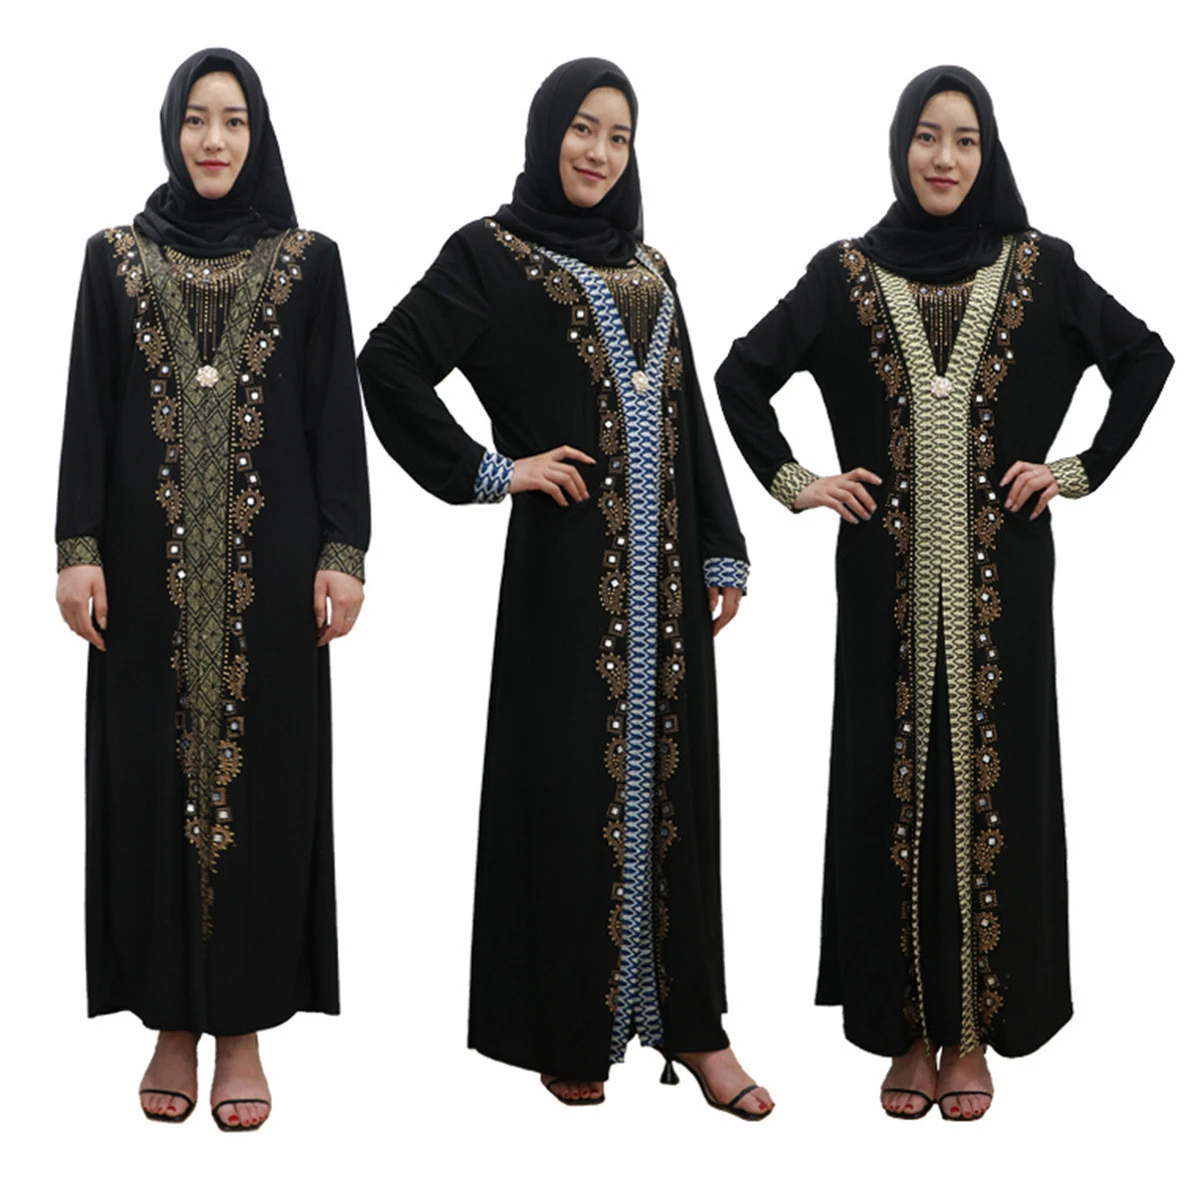 Abaya Dubai Muslim Dress Islamic Clothing In Stock Wholesale Fashion Knitted Muslim Womens Clothing